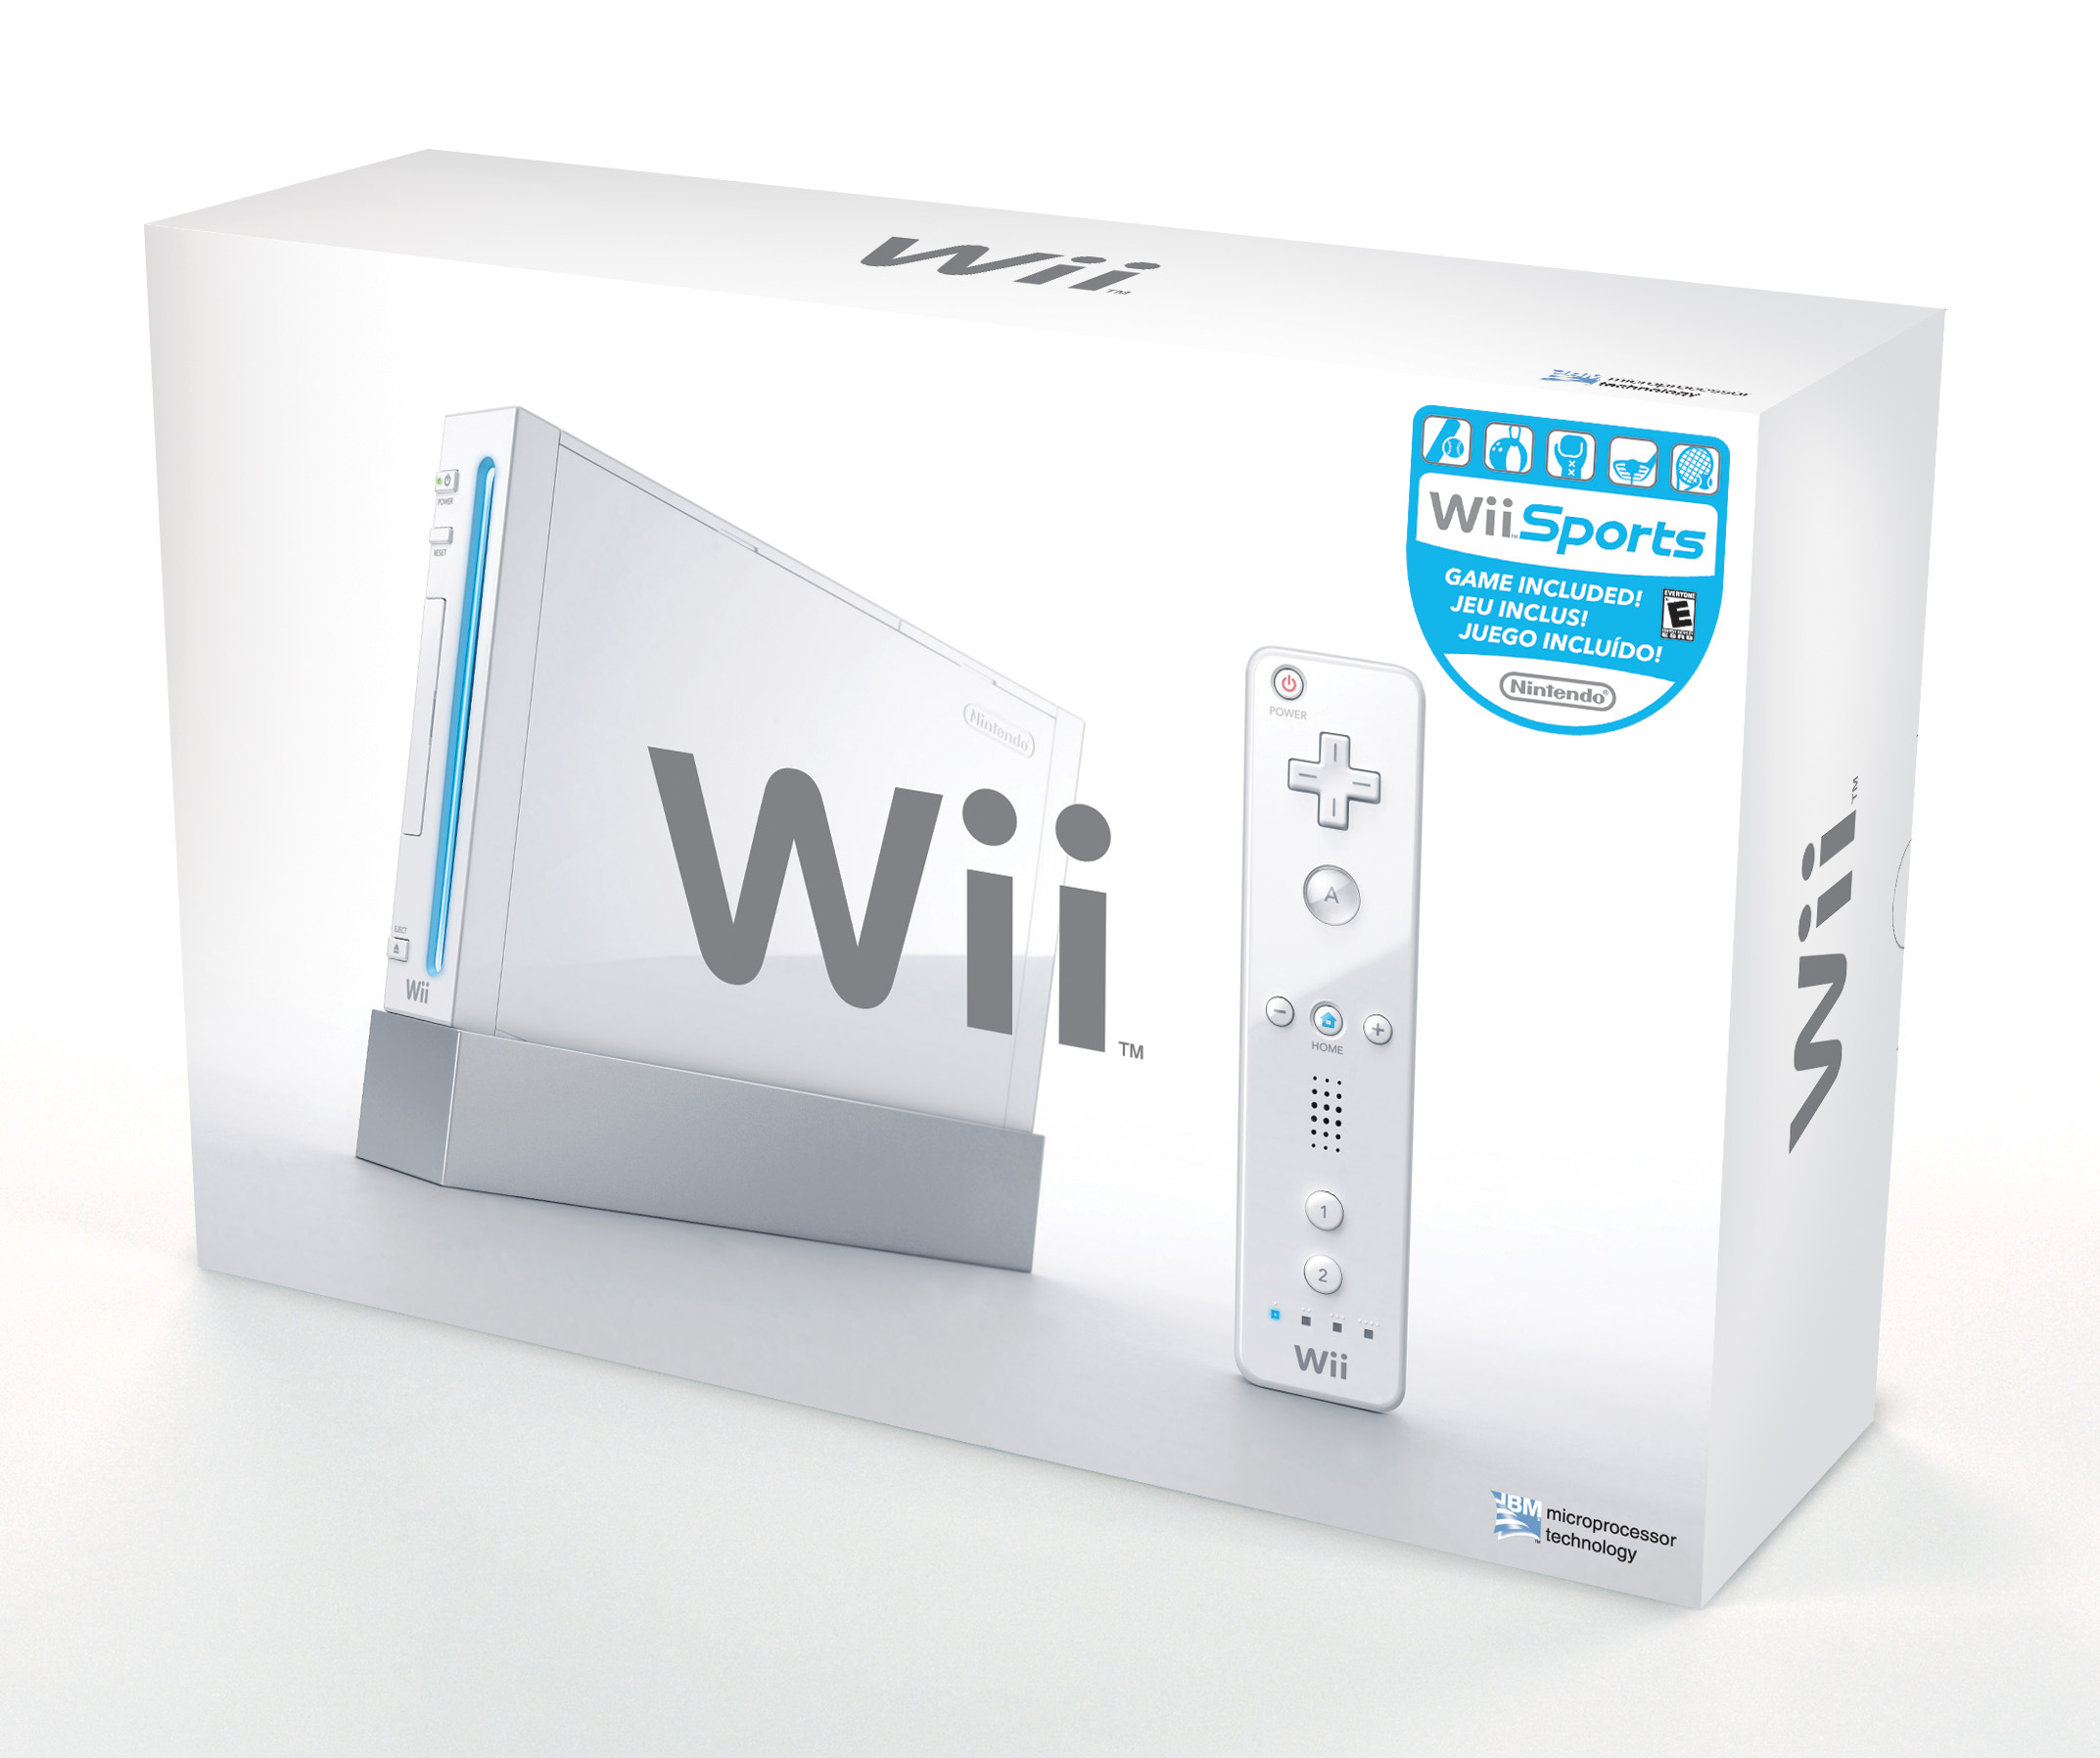 Nintendo Wii Box